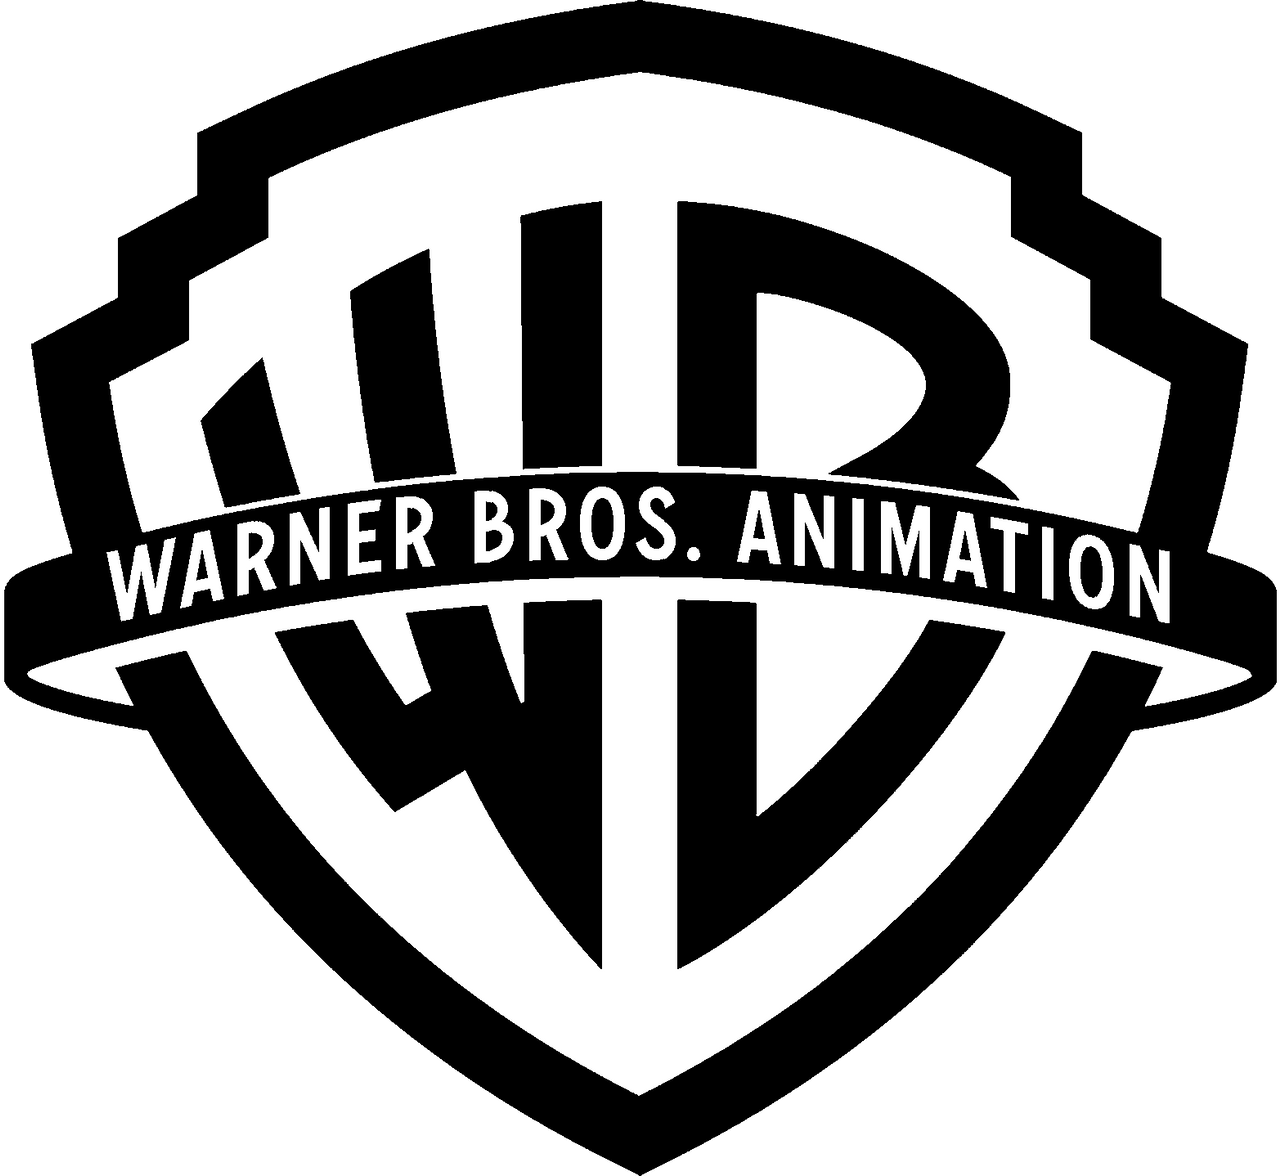 Warner Bros. Animation logo concept 2024 by WBBlackOfficial on DeviantArt